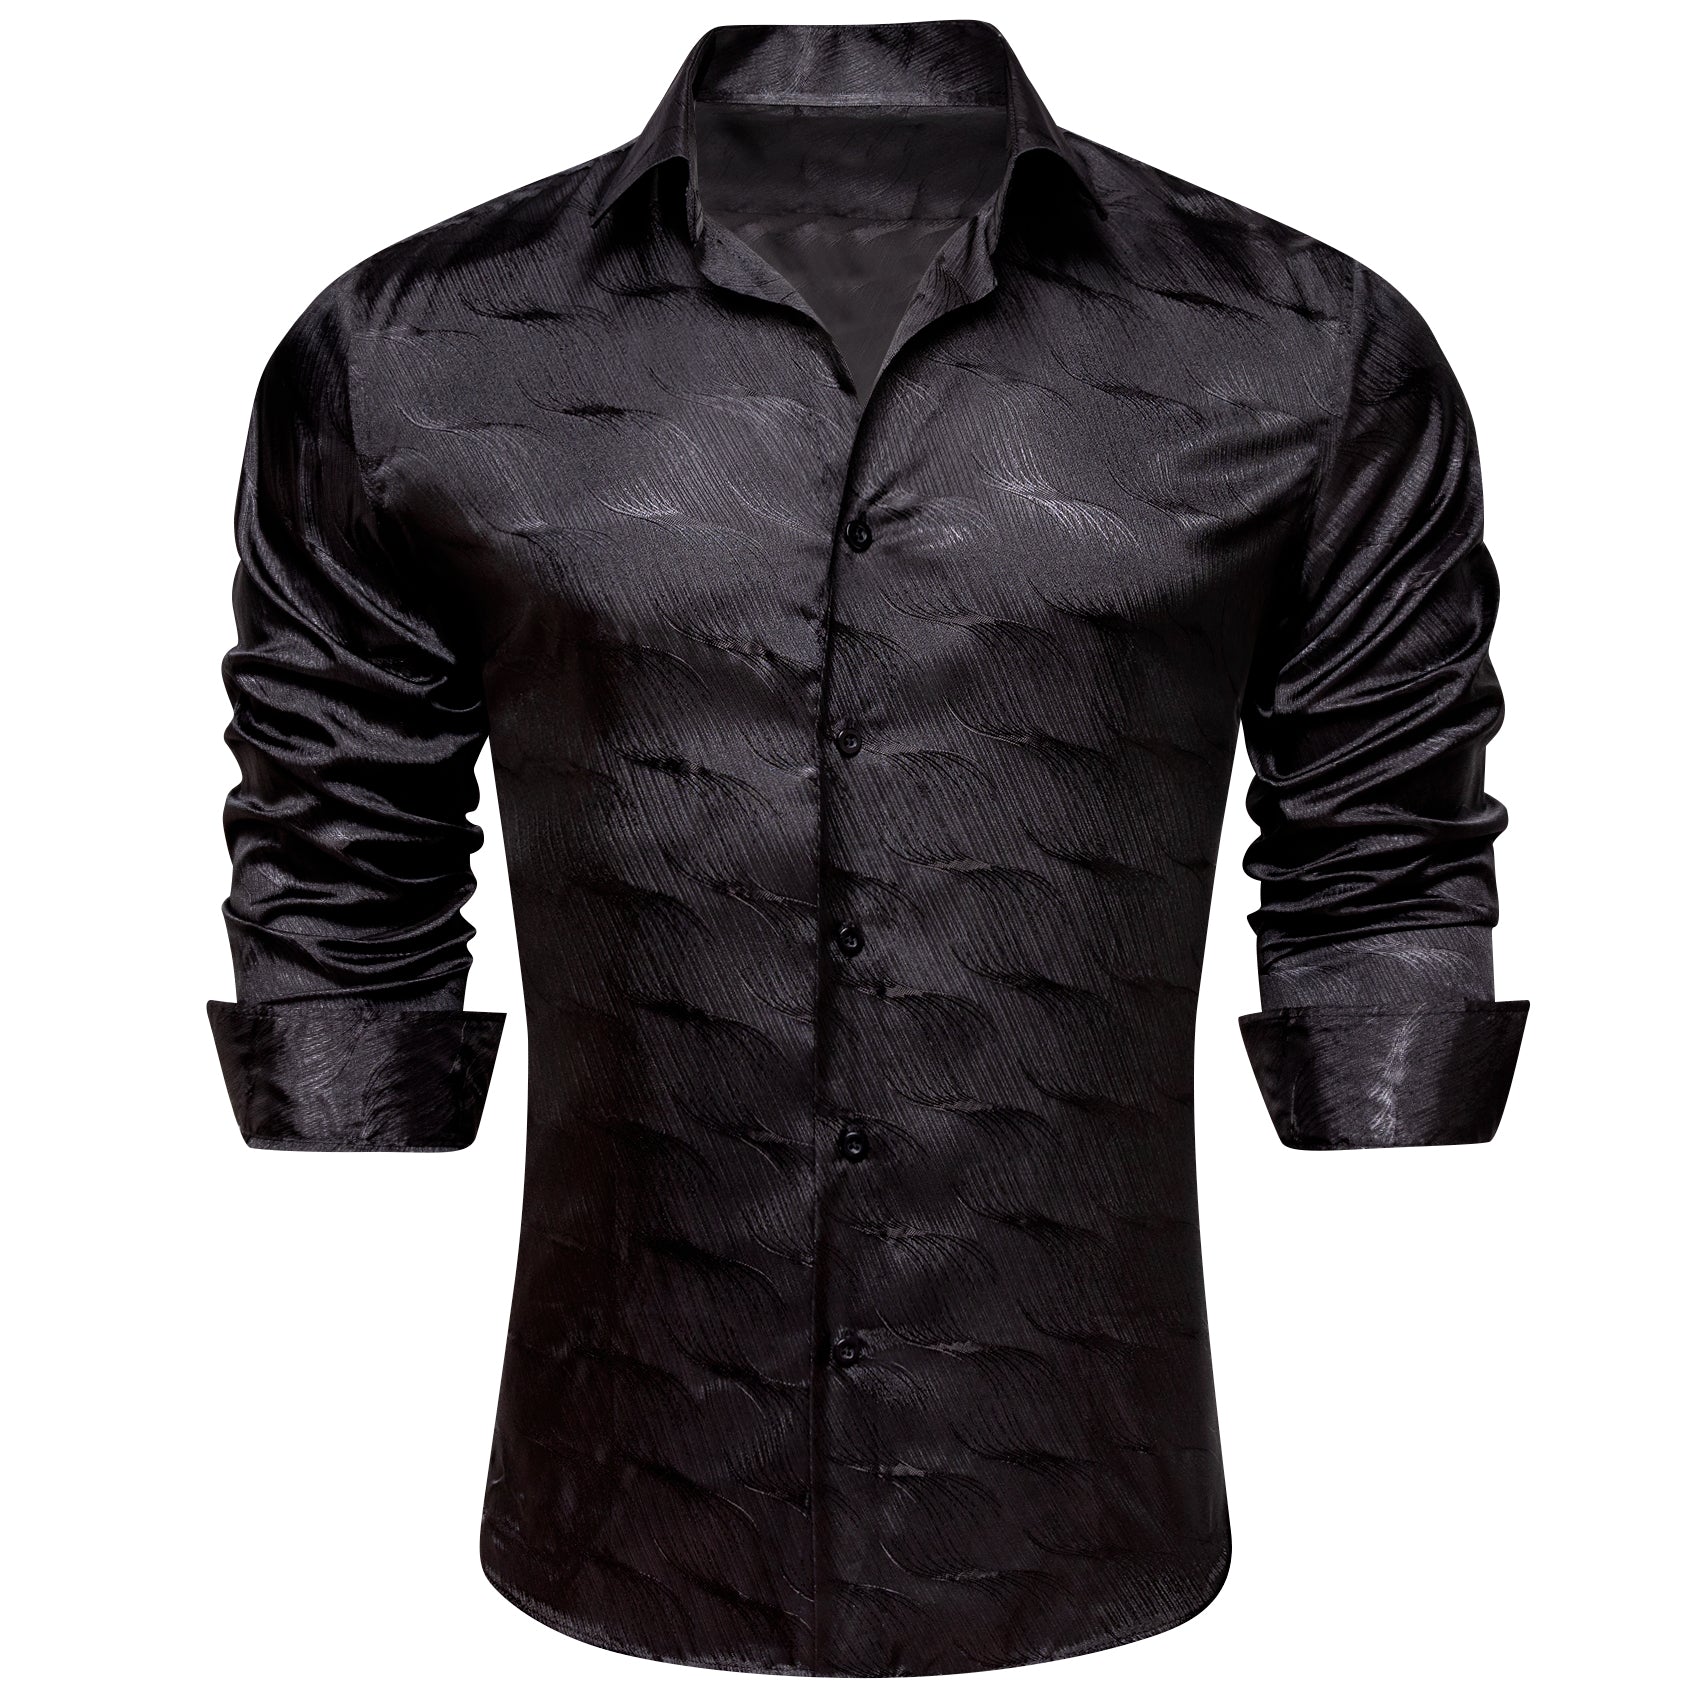 Barry.wang Classy Black Solid Silk Men's Shirt